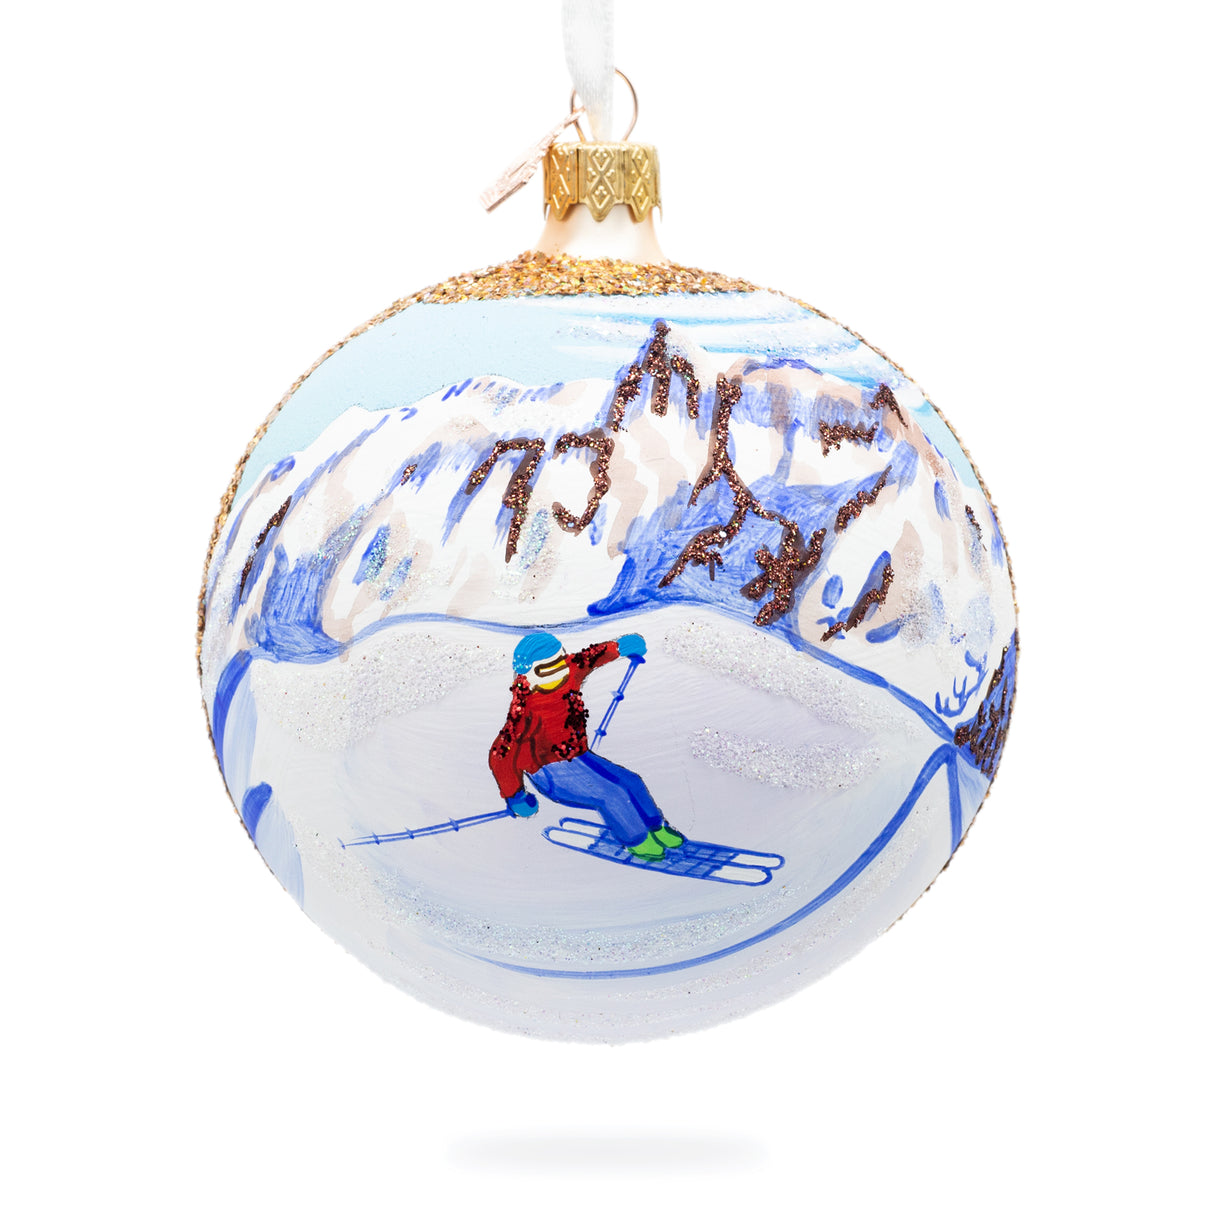 Chamonix Ski Resort, France Glass Ball Christmas Ornament 4 Inches in Multi color, Round shape